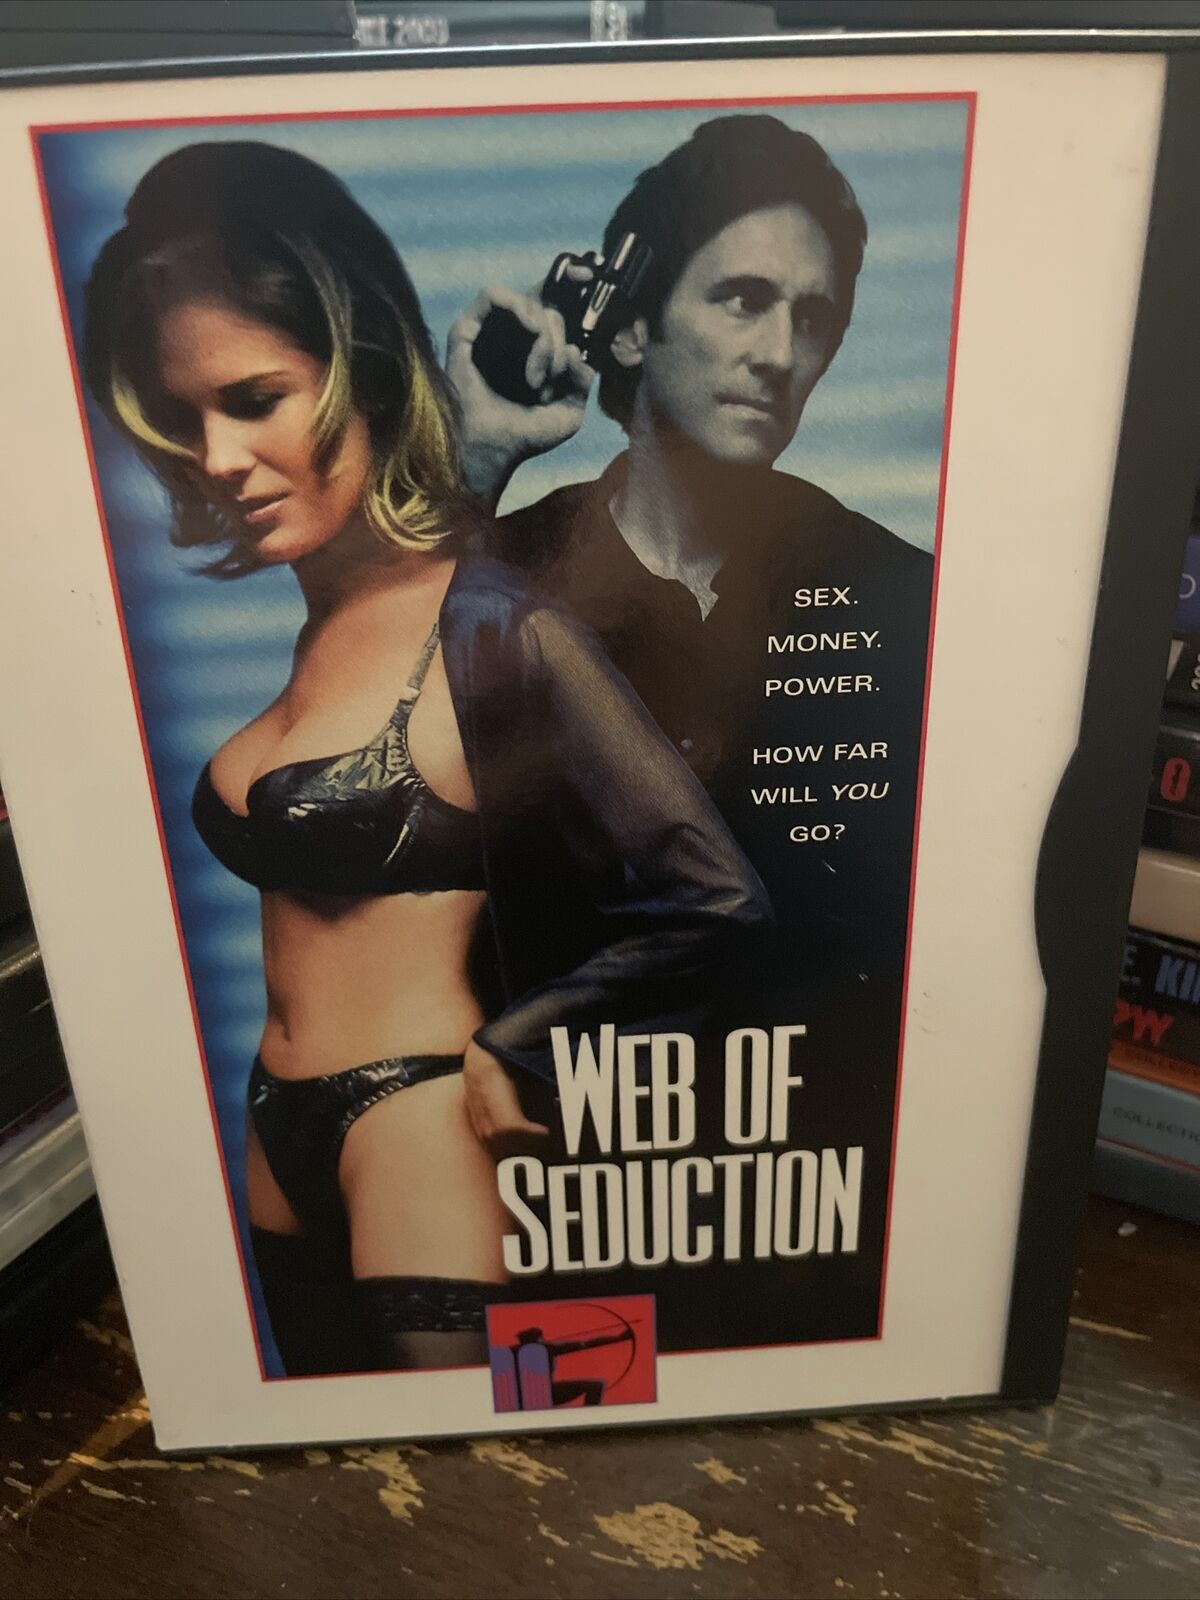 dave dohrmann add photo web of seduction online